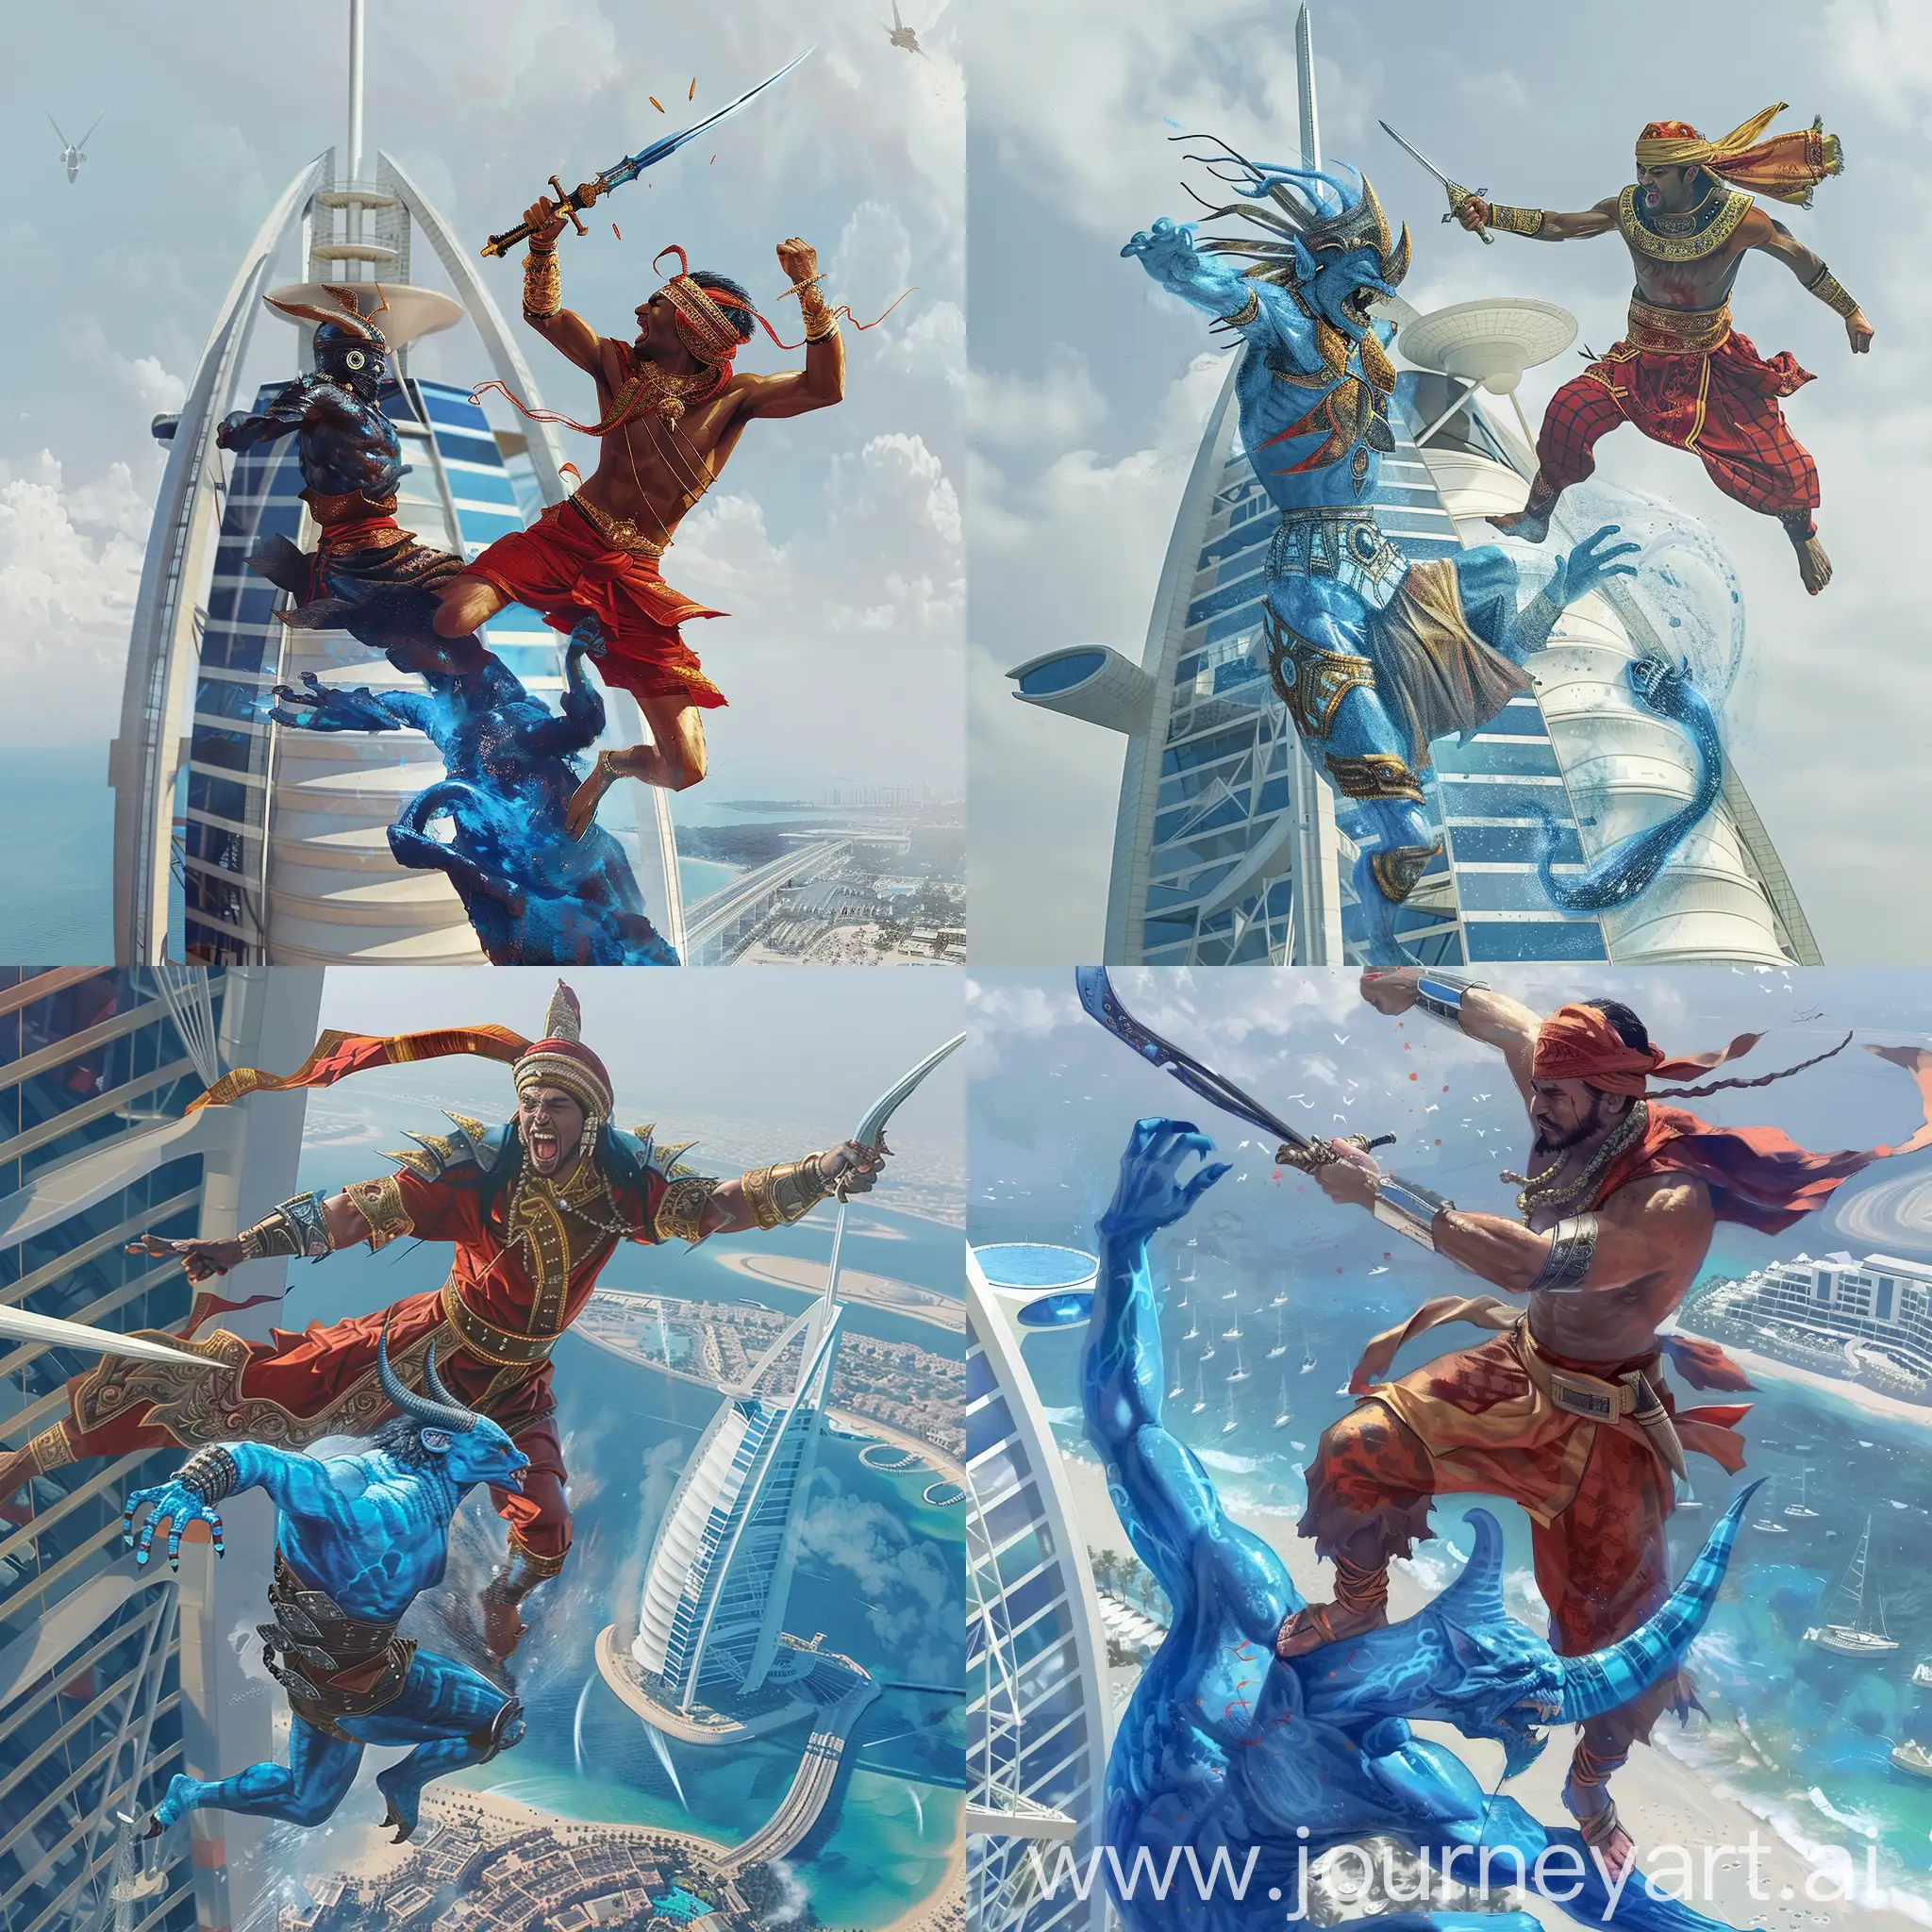 Malay-Warrior-Battles-Blue-Demon-atop-Burj-Al-Arab-in-2030